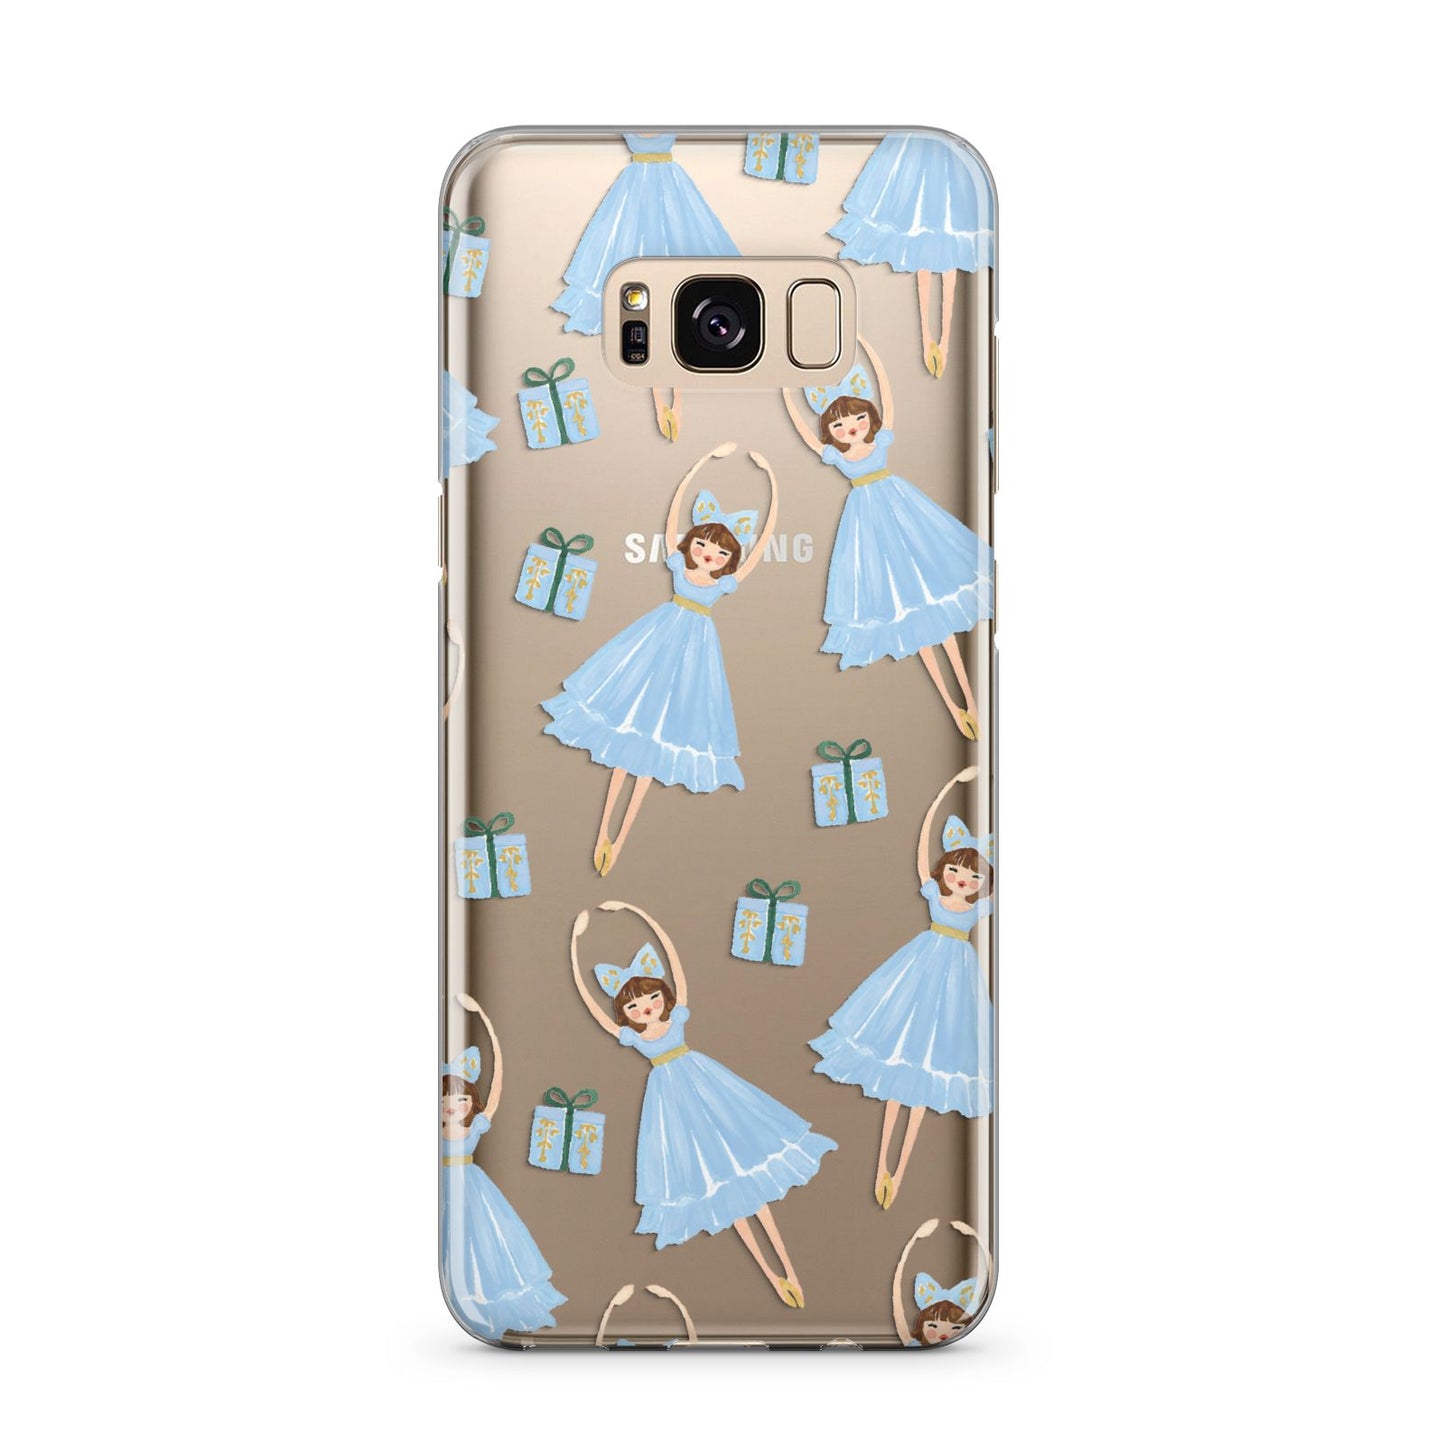 Christmas ballerina present Samsung Galaxy S8 Plus Case